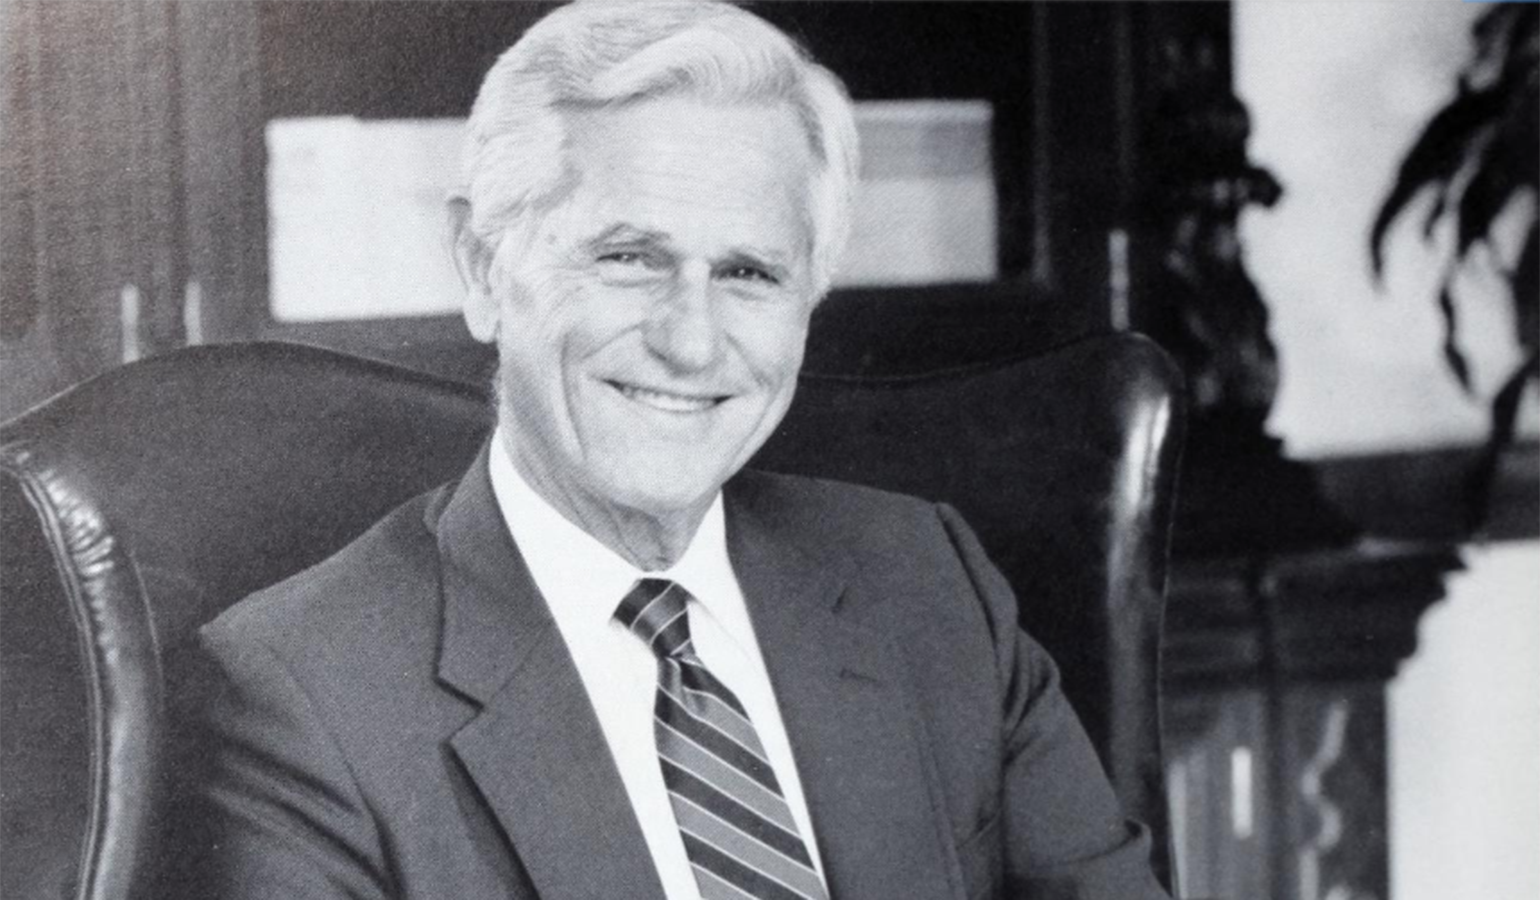 John D. Scarlett named dean in 1979.